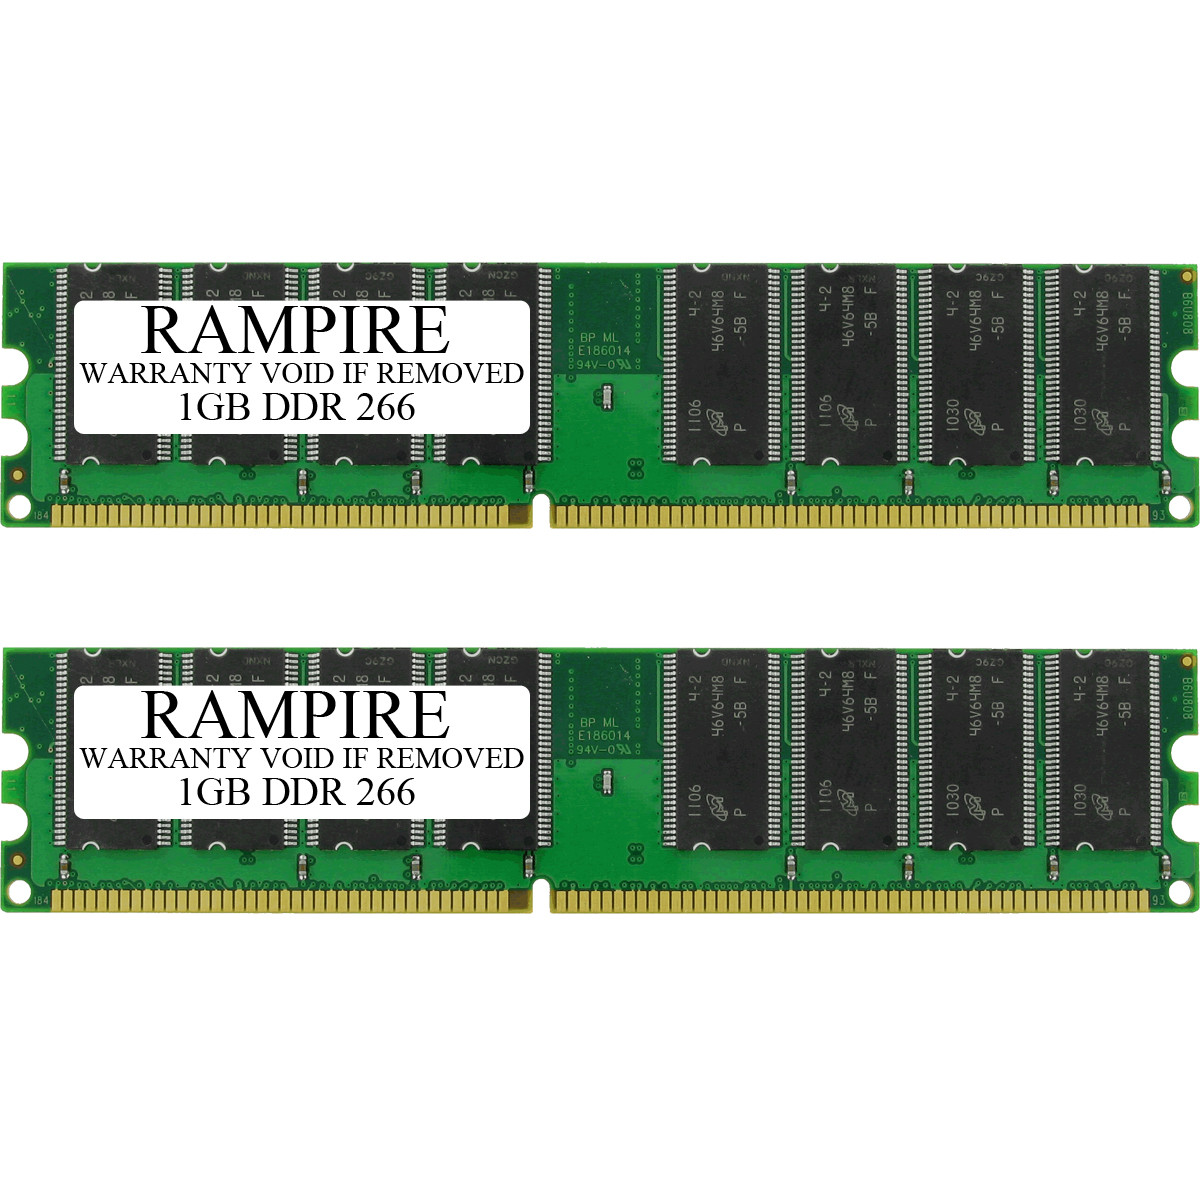 RAMPIRE 2GB (2 x 1GB) DDR 266 (PC 2100) 184-Pin DDR SDRAM 2.5V 2Rx8 Non-ECC UDIMM Memory for Desktop PC